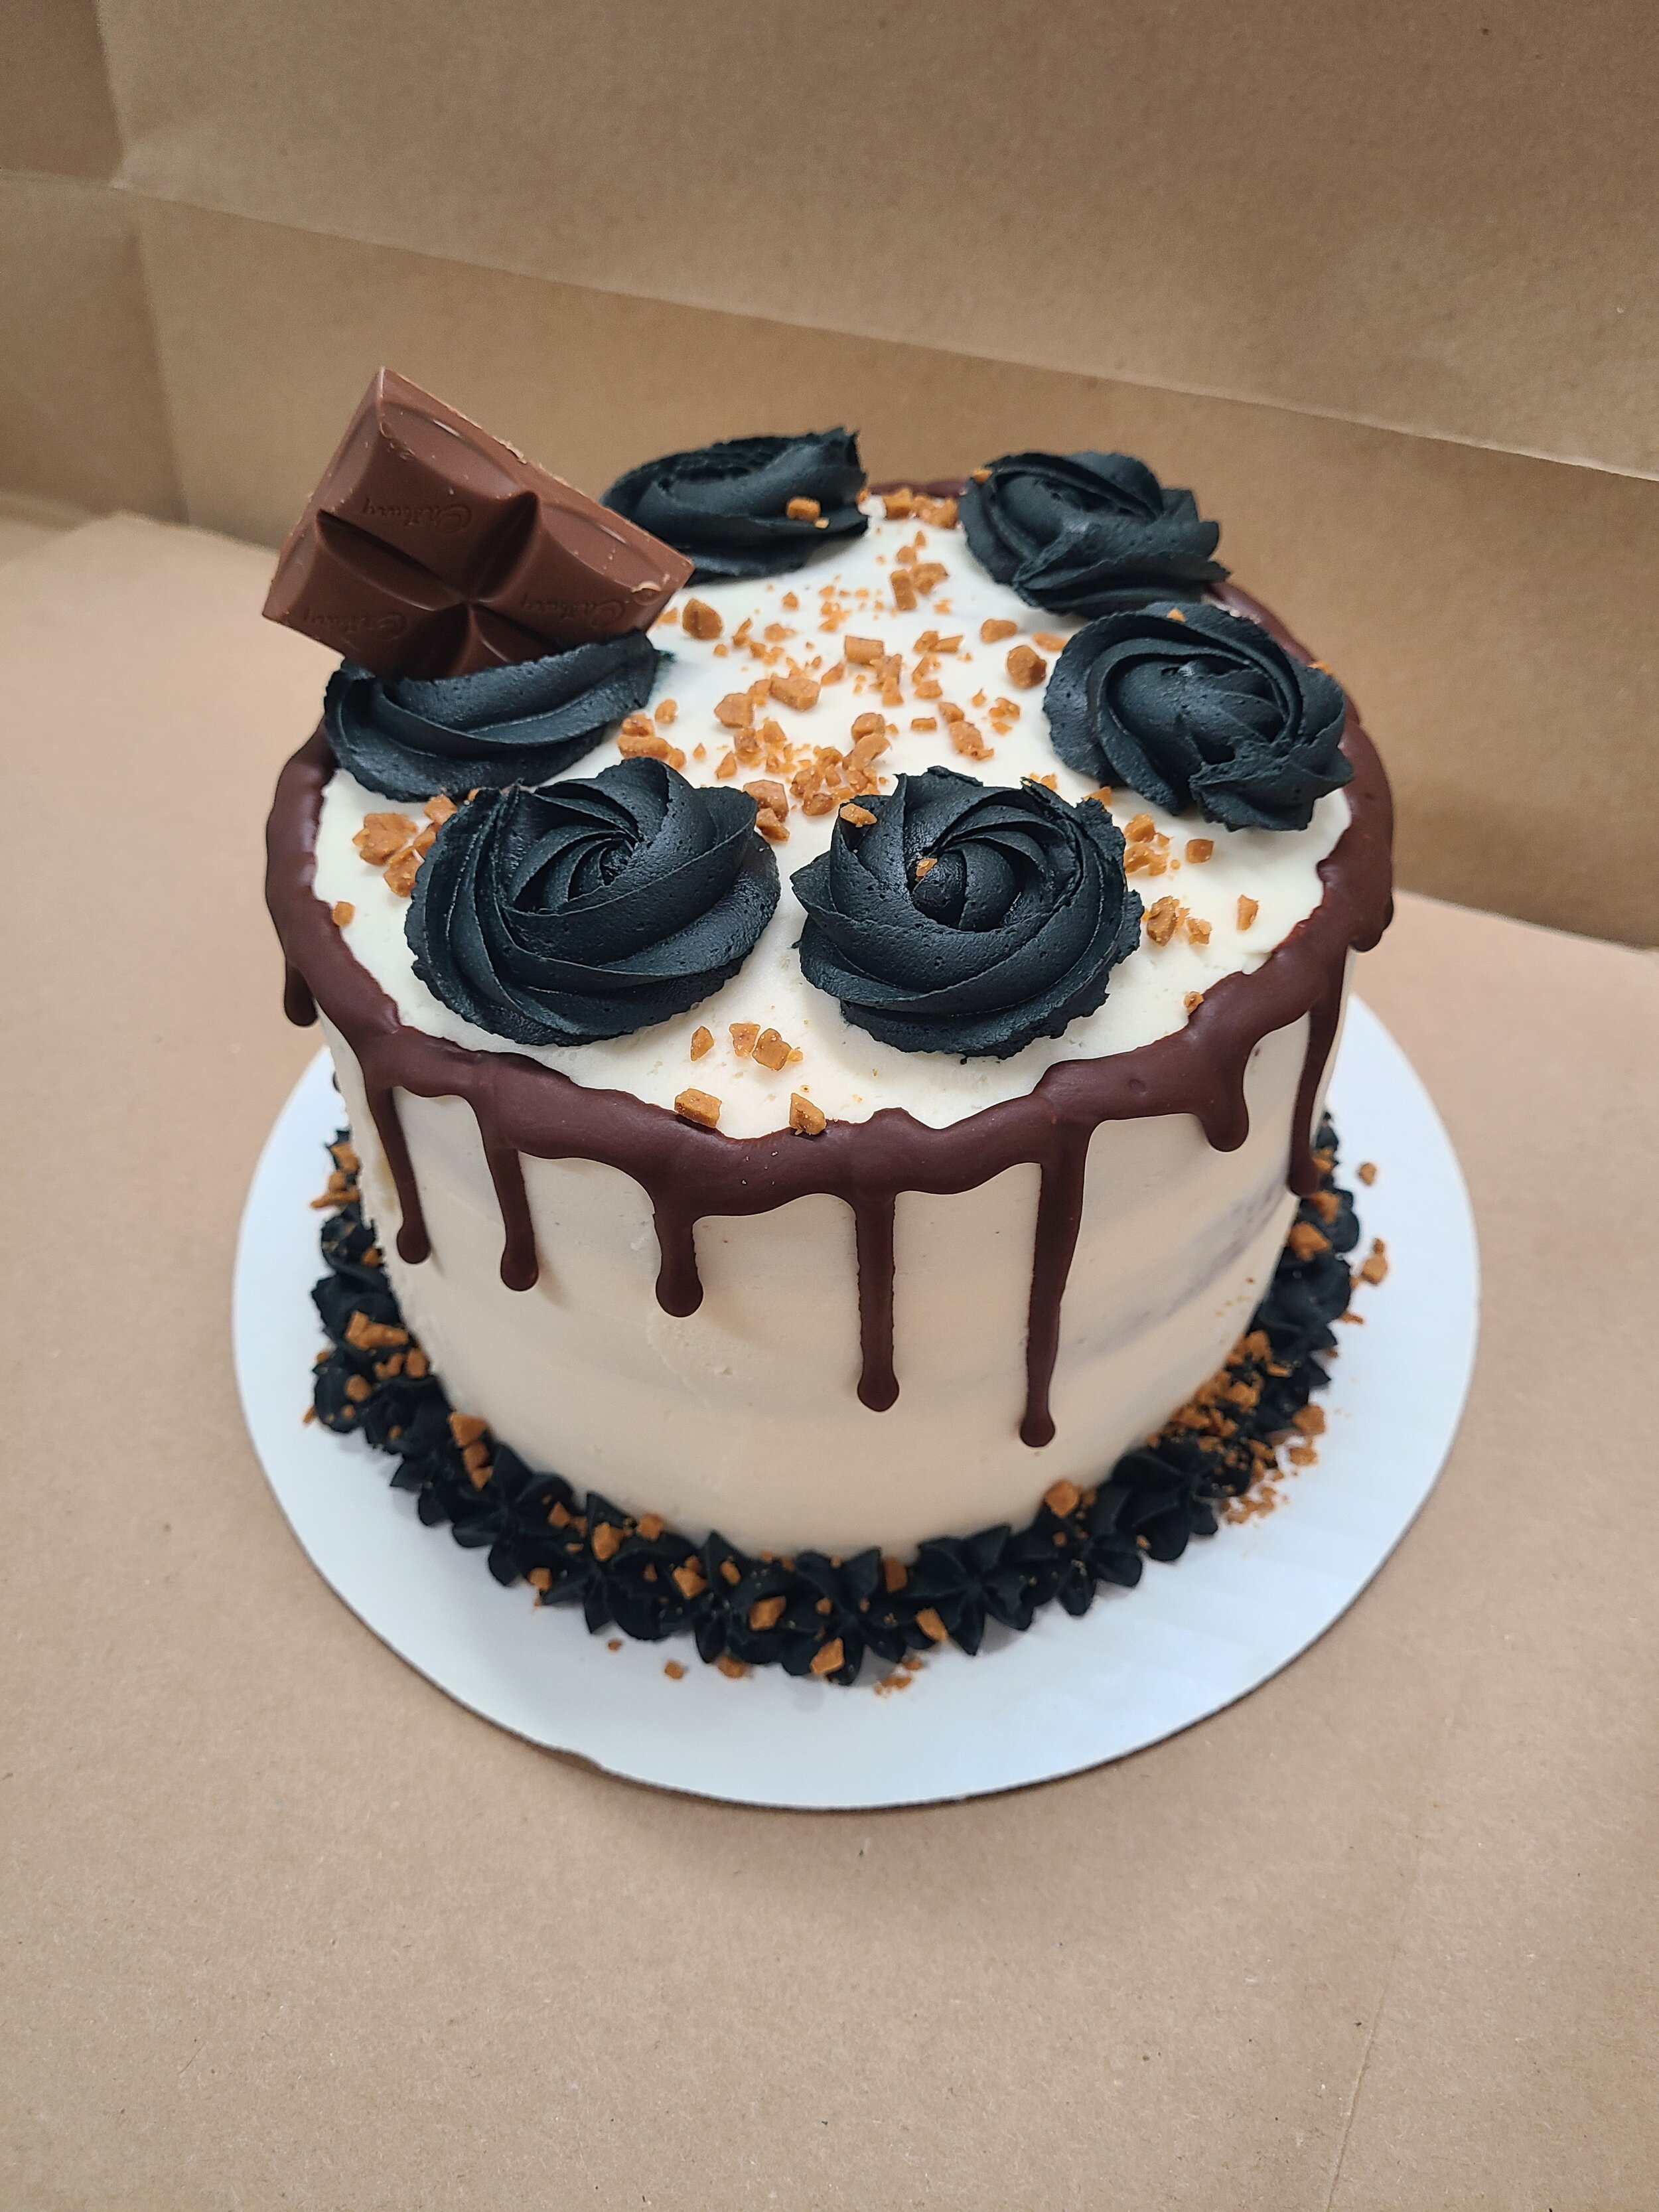 Chocolate Caramilk bar birthday cake